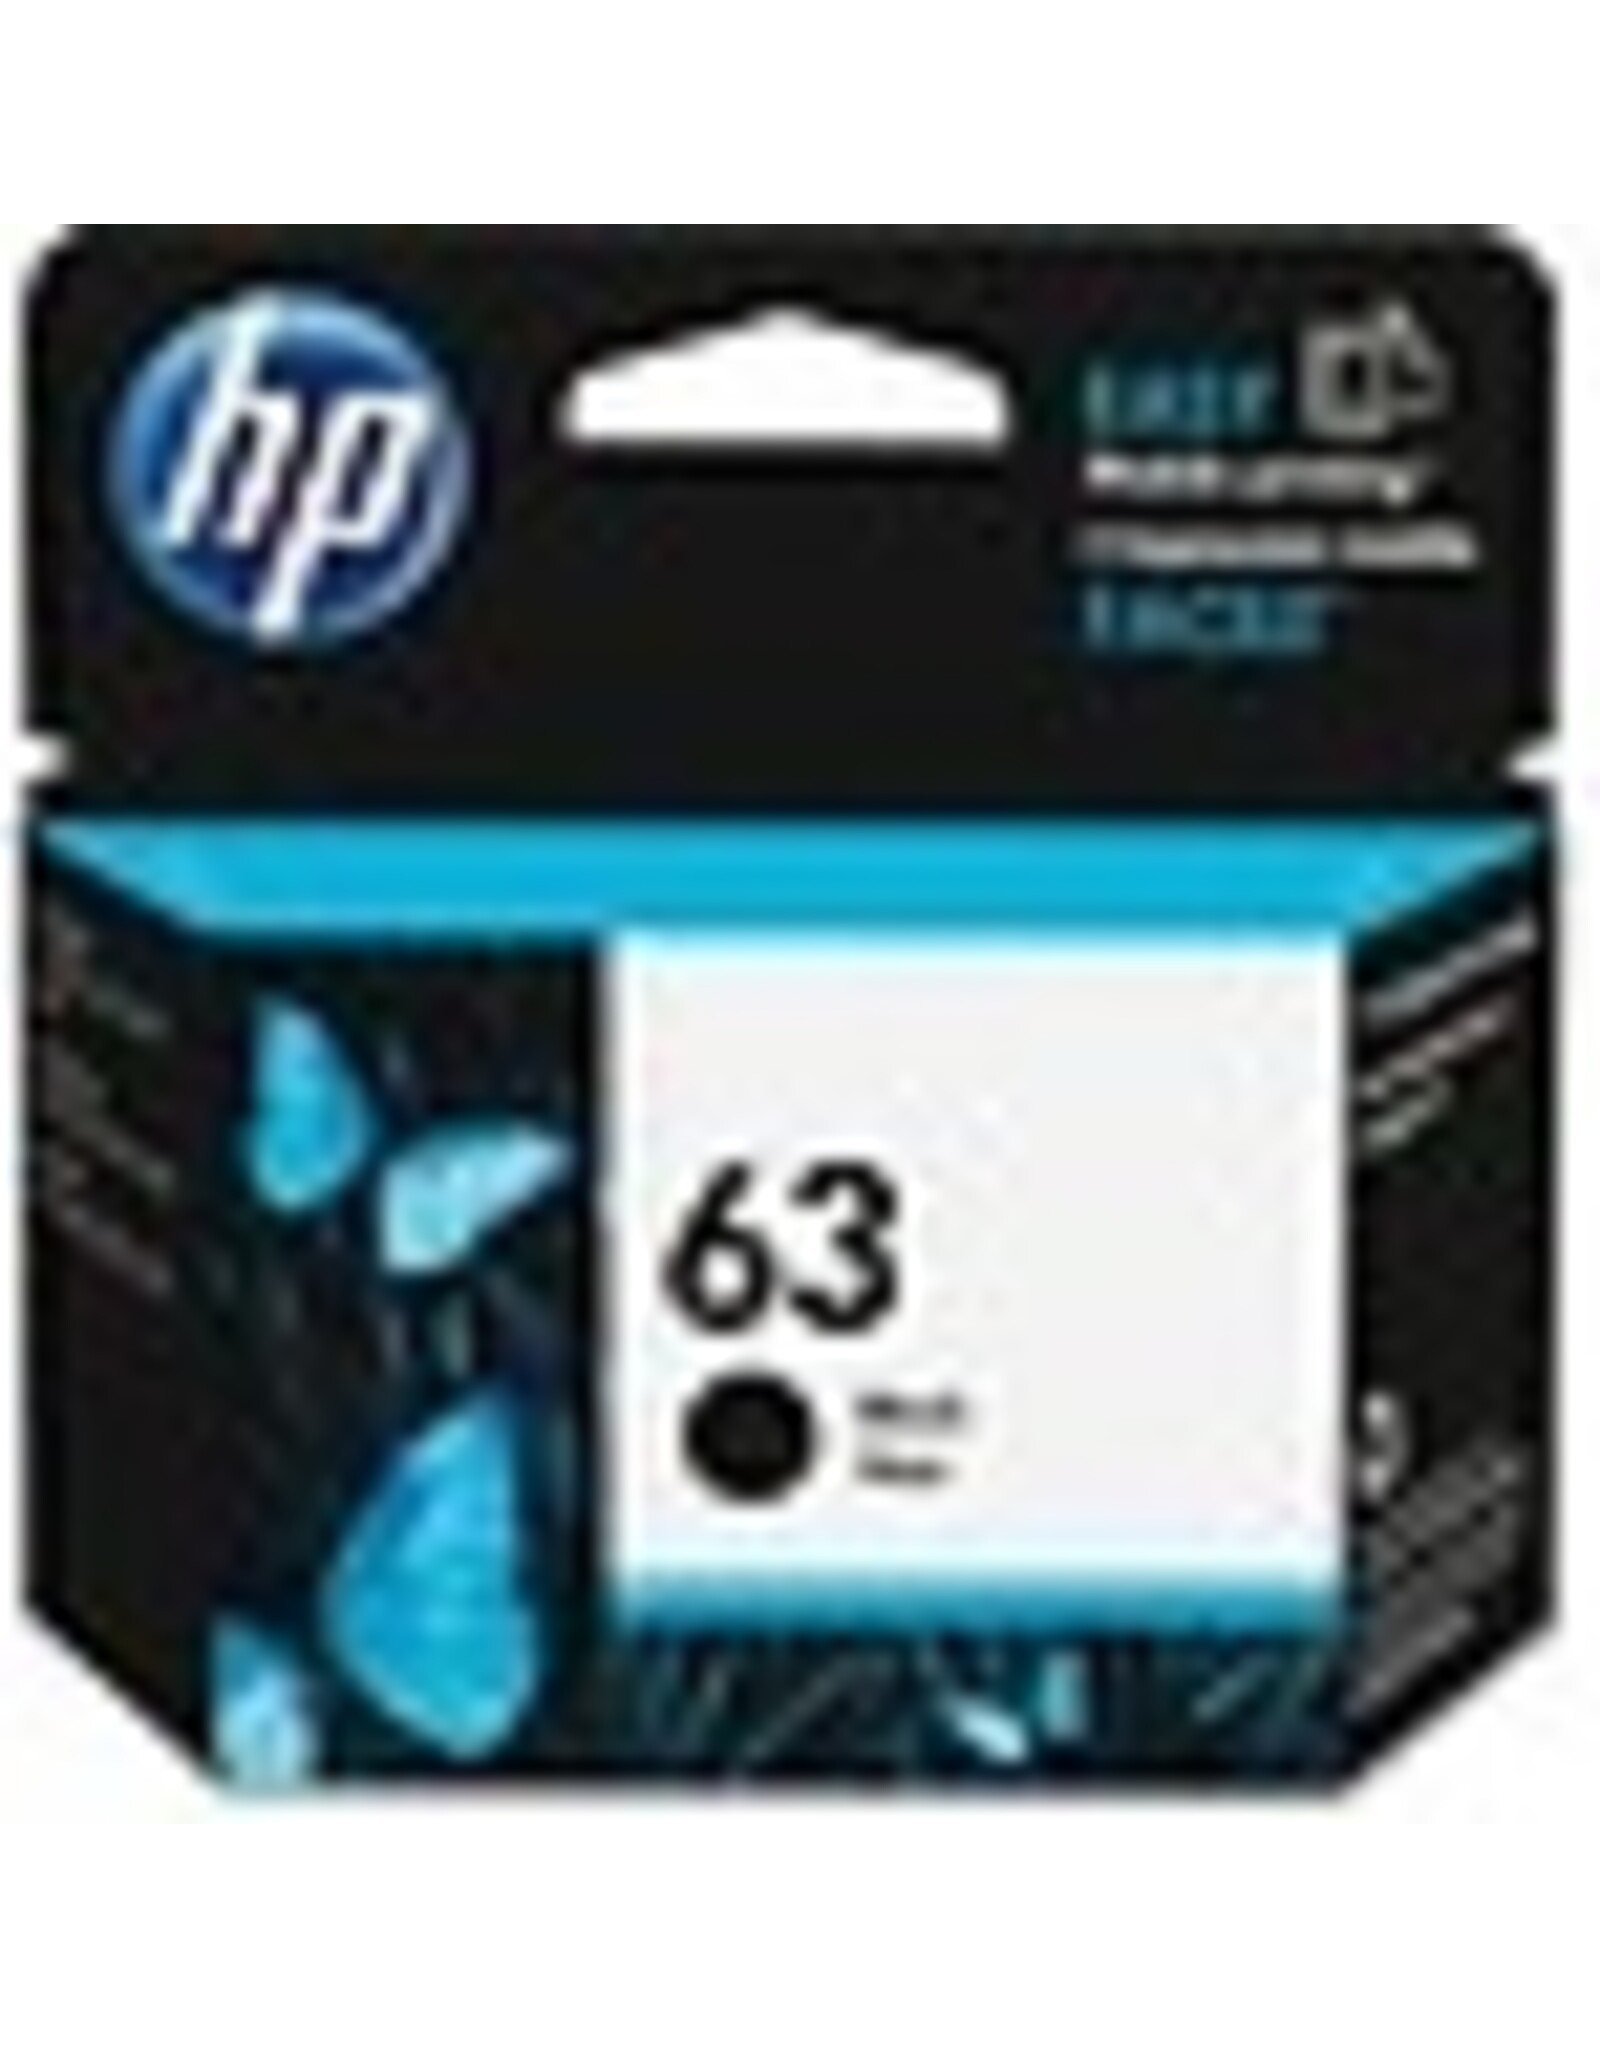 HP HP 63 Black Original Ink Cartridge - Single Pack